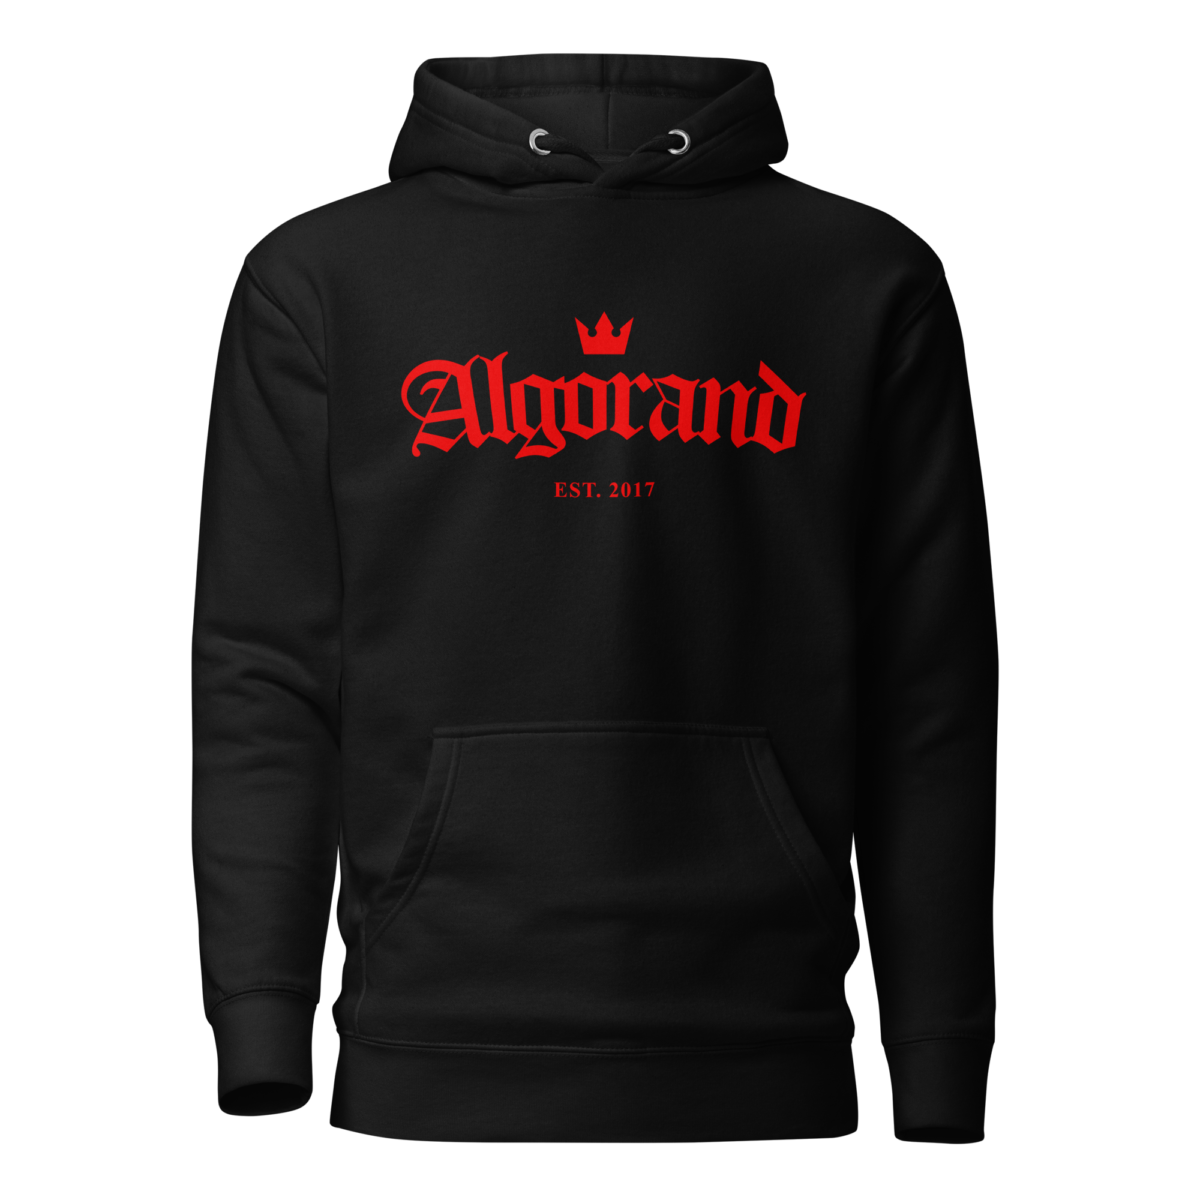 unisex premium hoodie black front 63a330ef191d4 - Algorand (RED) Hoodie